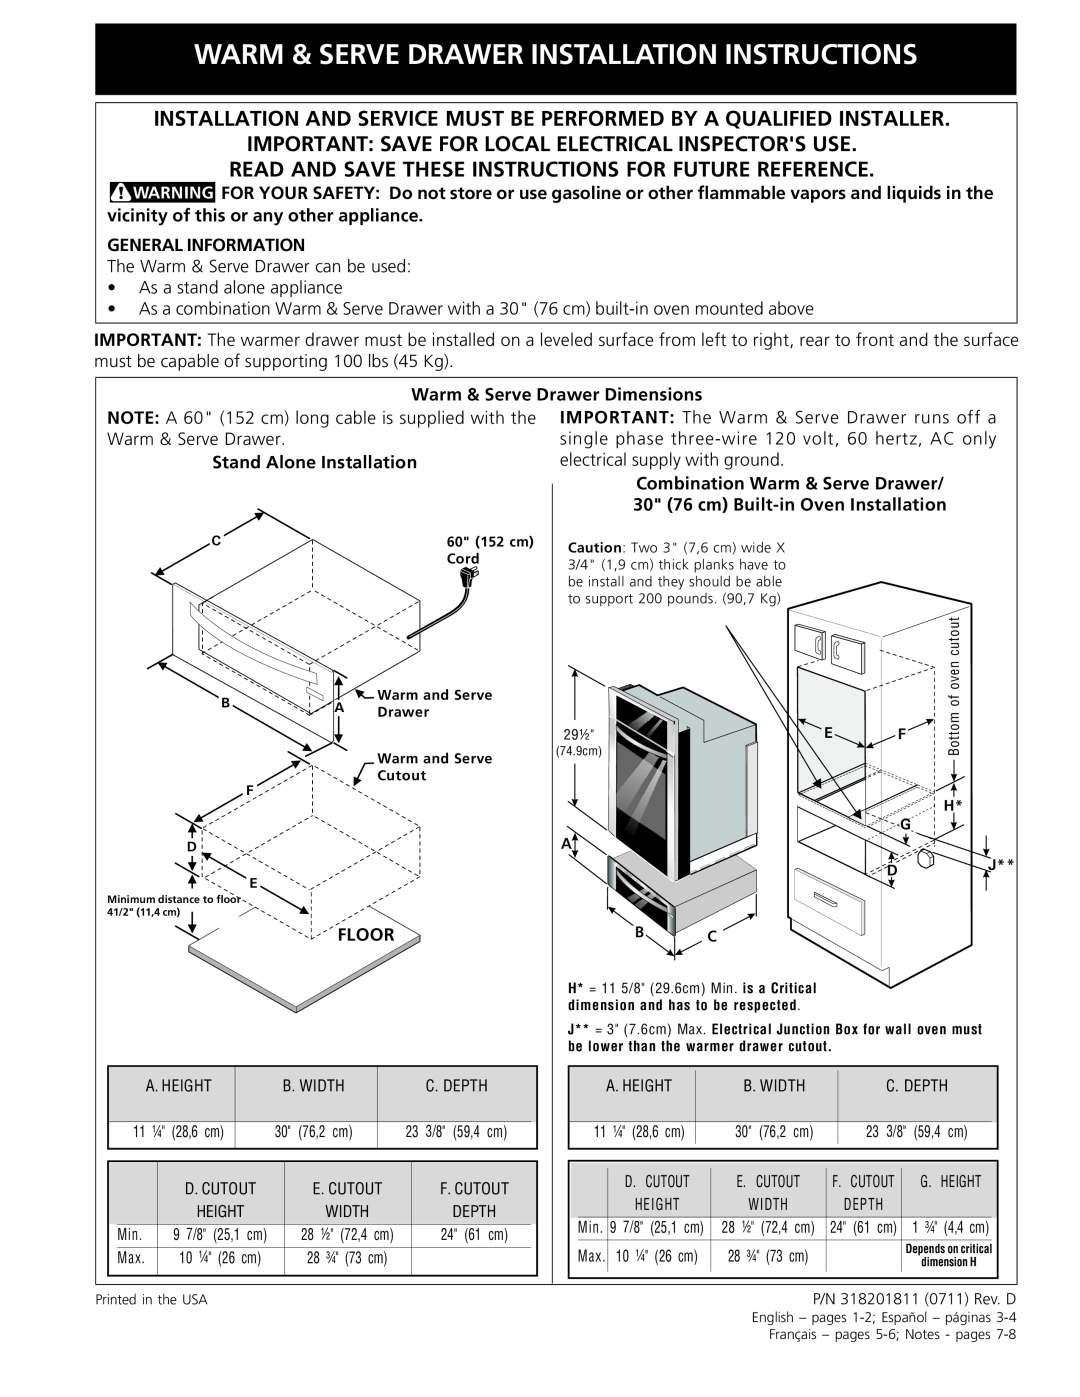 Electrolux 318201811 installation instructions Warm & Serve Drawer Installation Instructions, General Information, Floor 